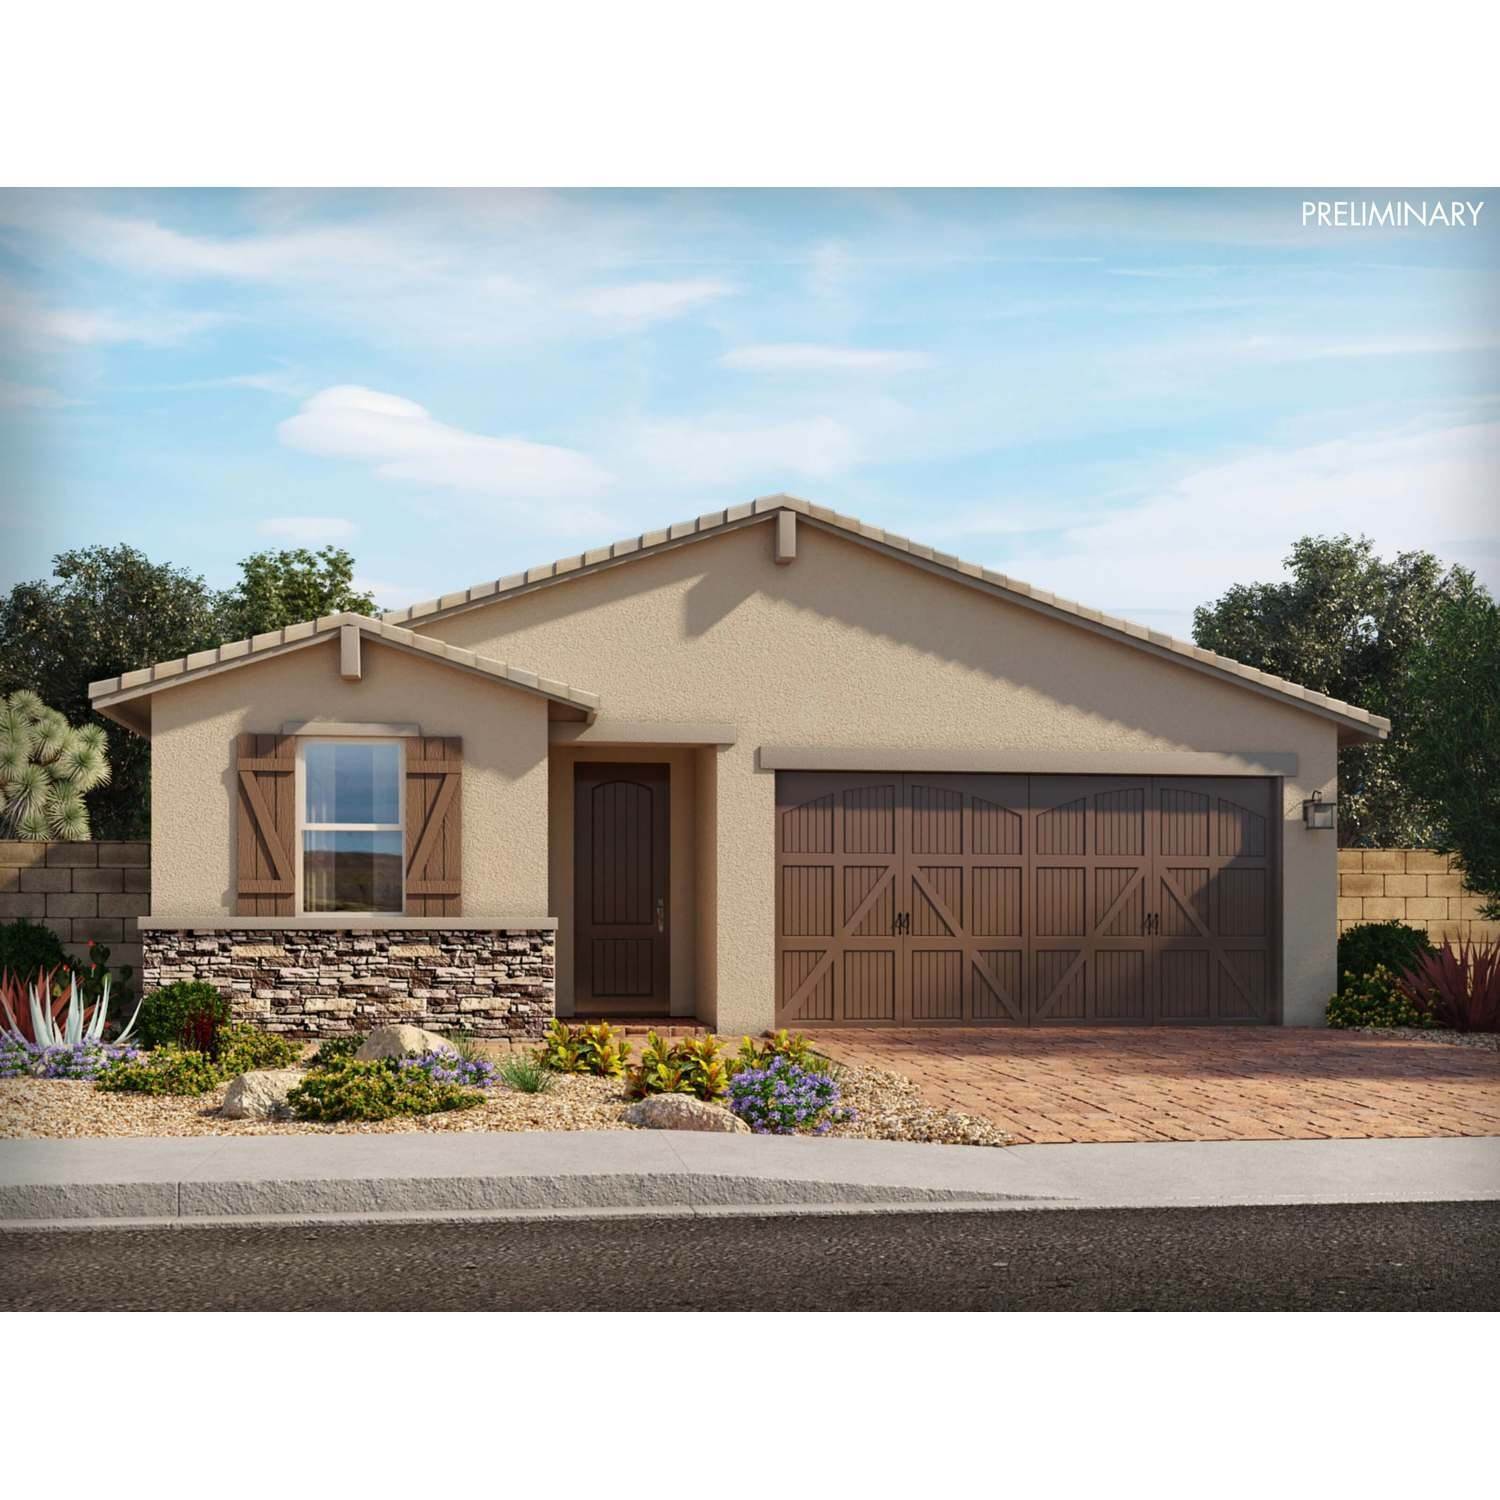 24. Bella Vista Farms - Estate Series xây dựng tại 3563 E Jasmine Way, San Tan Valley, AZ 85143